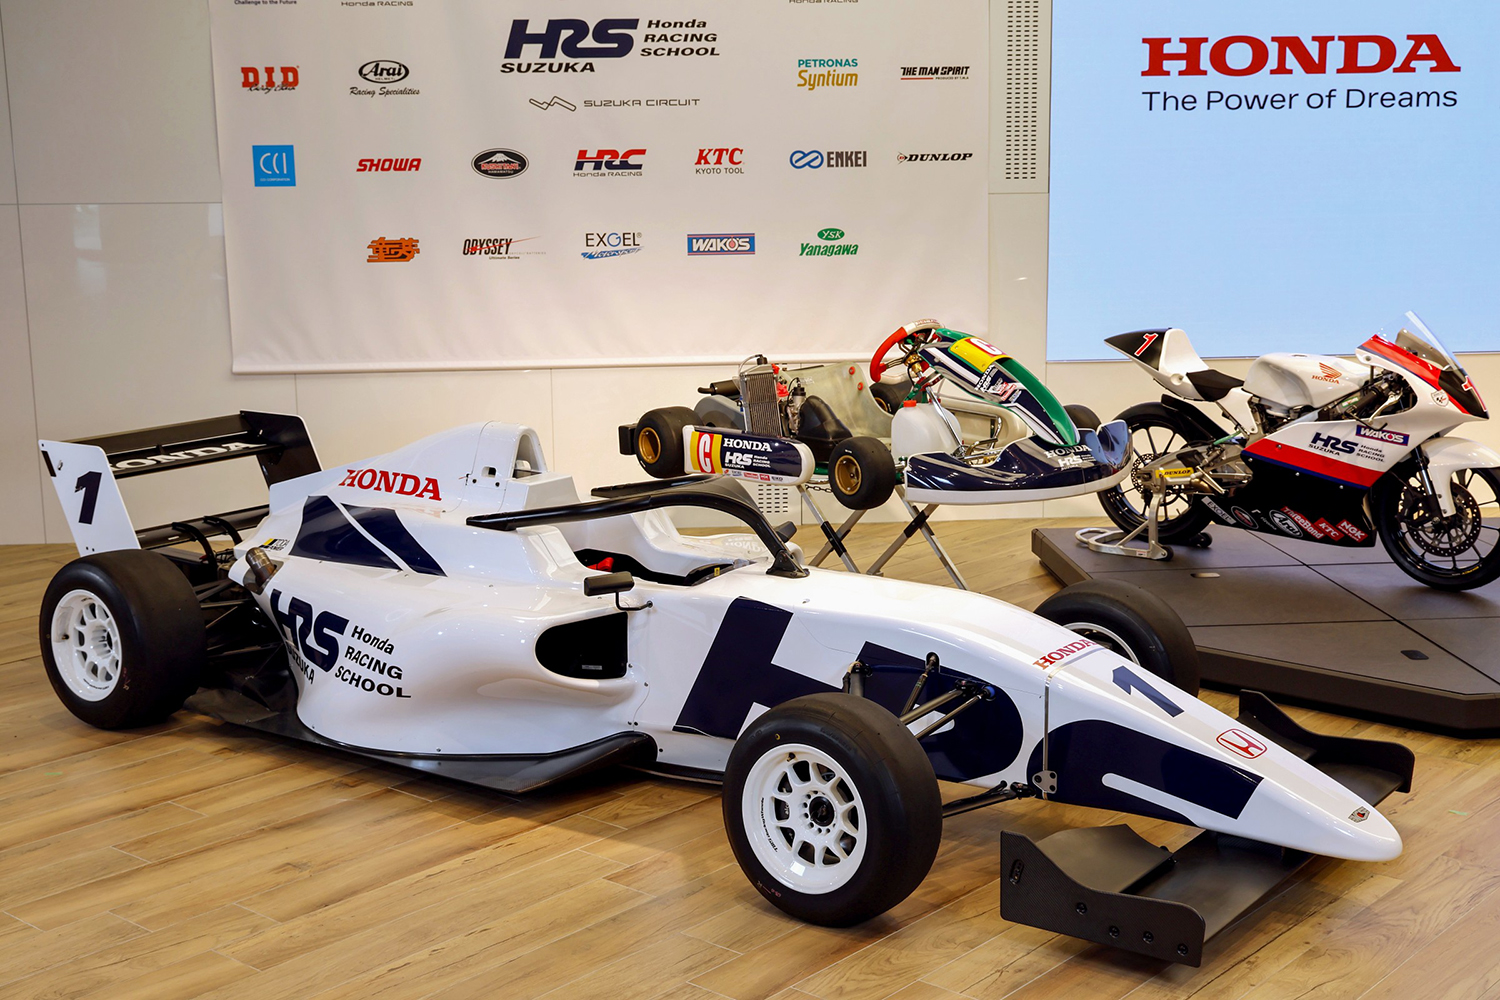 「HRS」は日本のレーシングドライバー養成機関「虎の穴」だった 〜 画像23